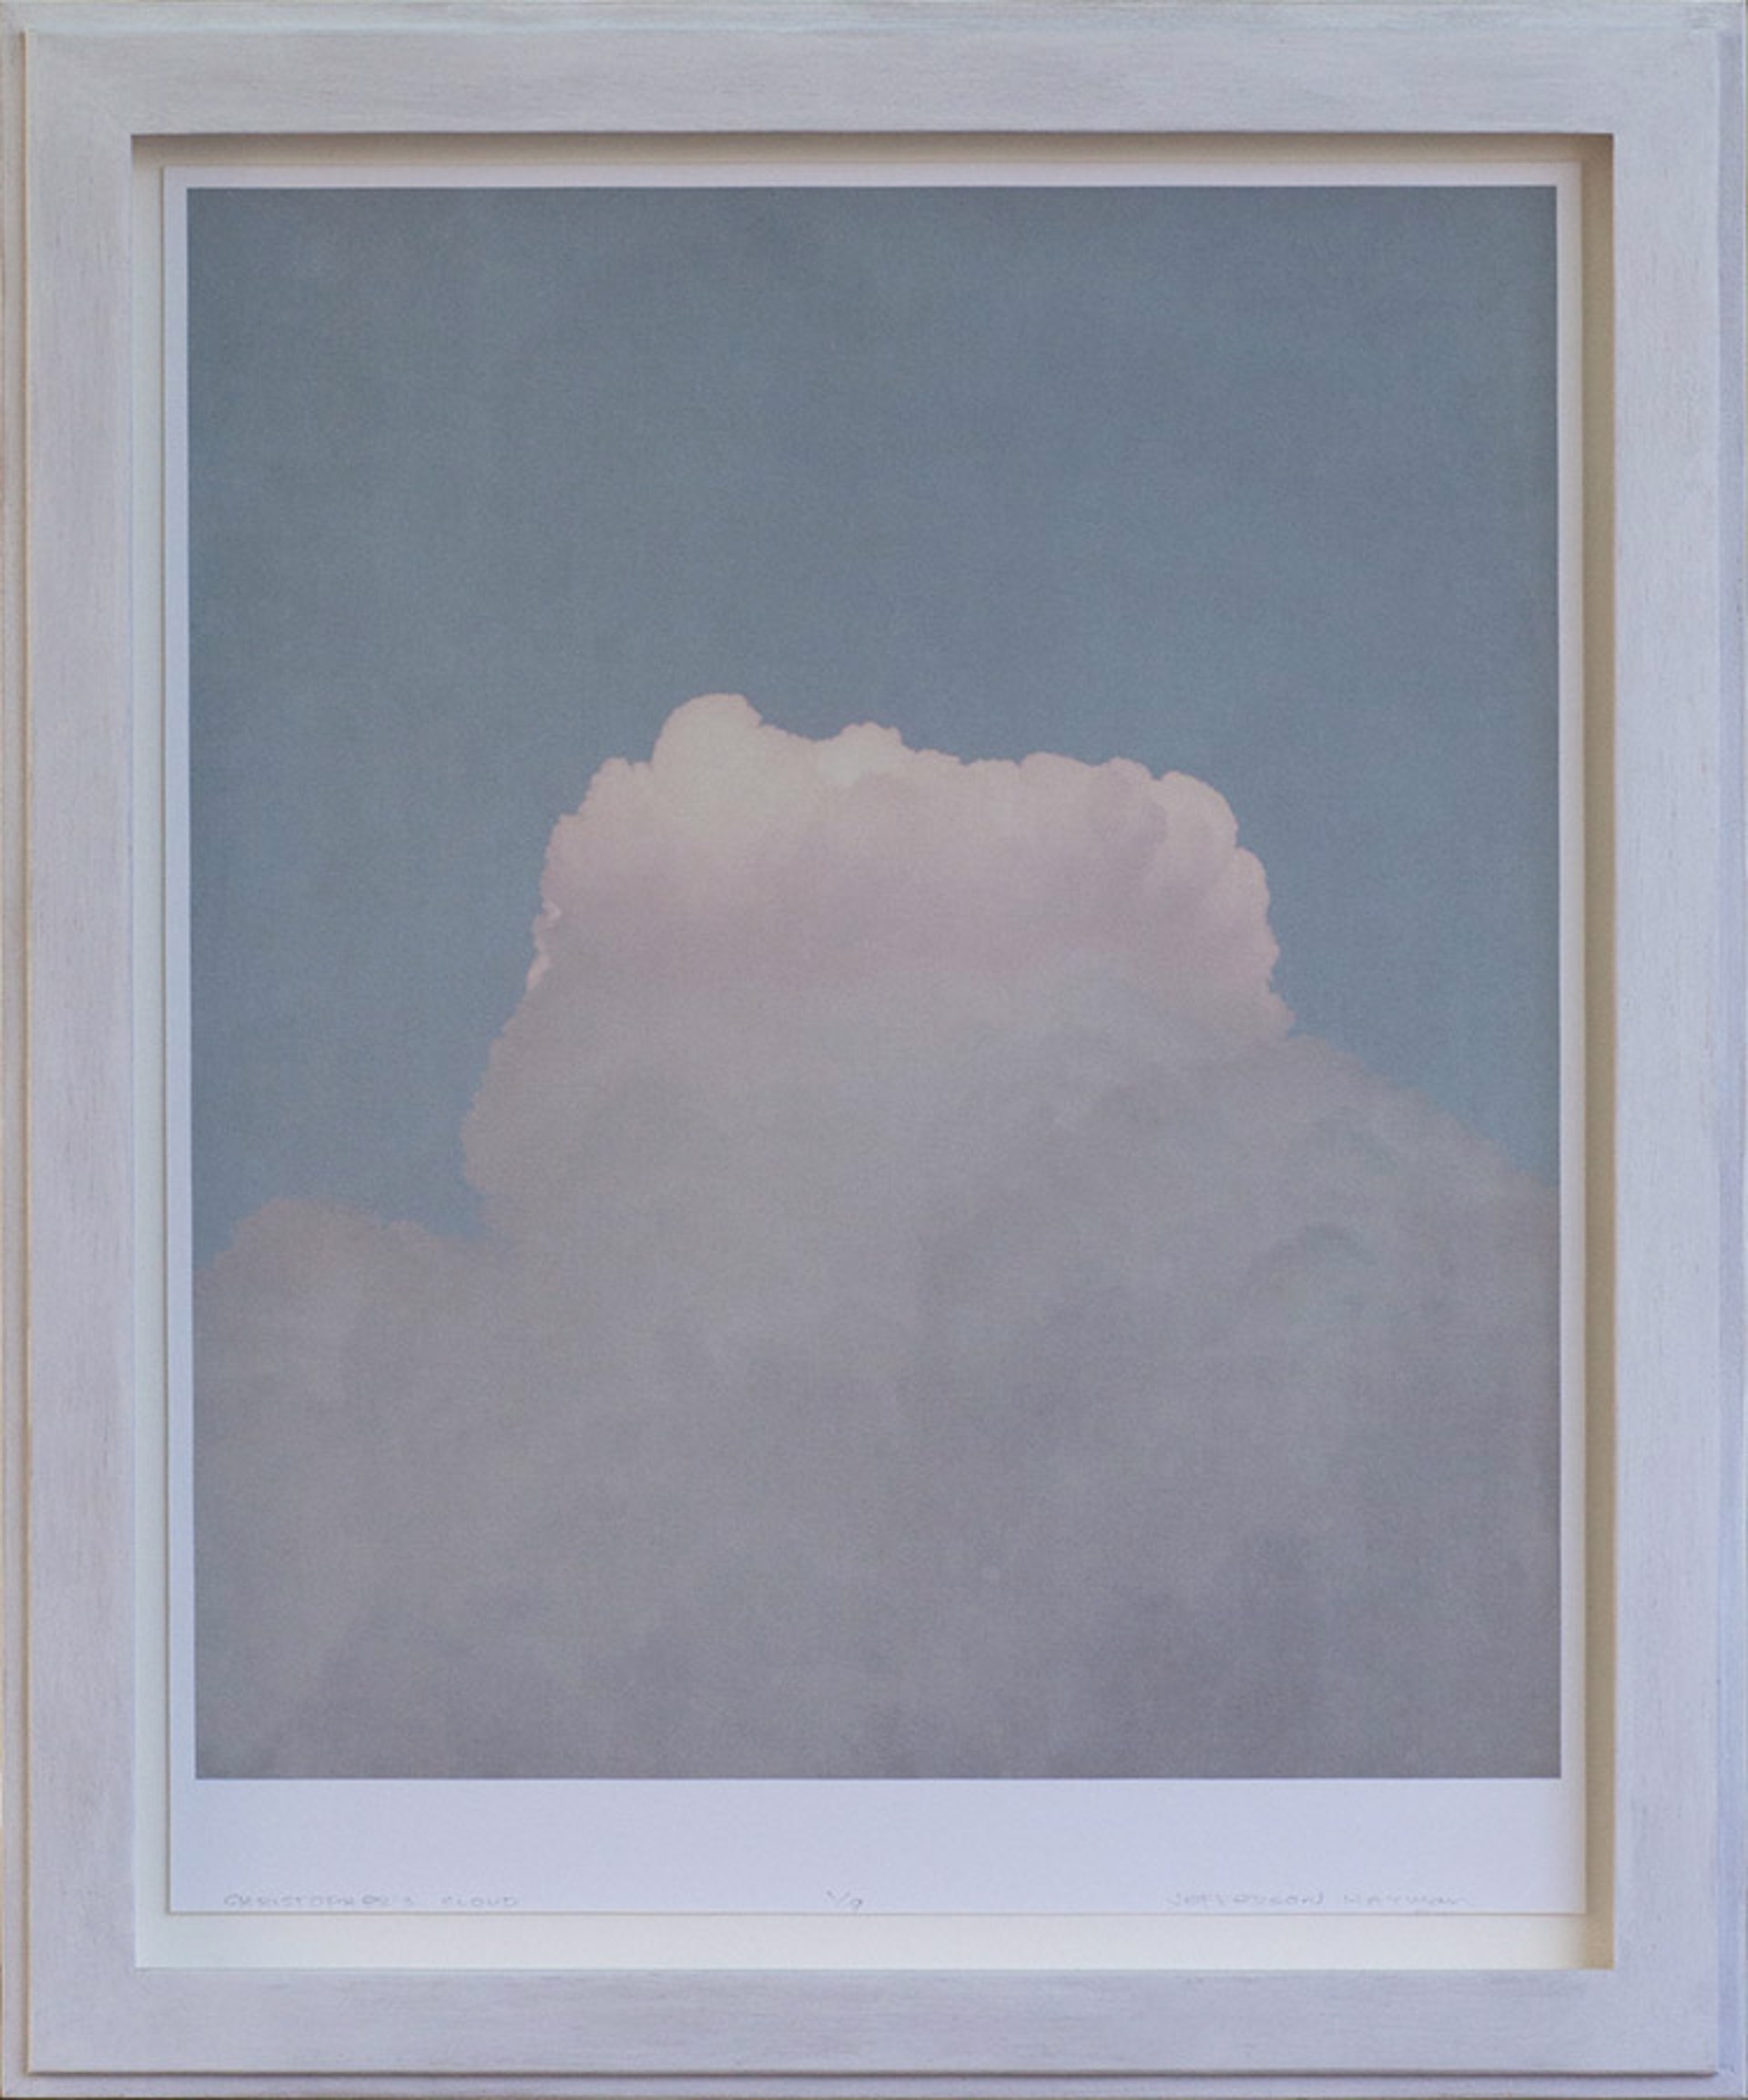 Christopher's Cloud by Jefferson Hayman